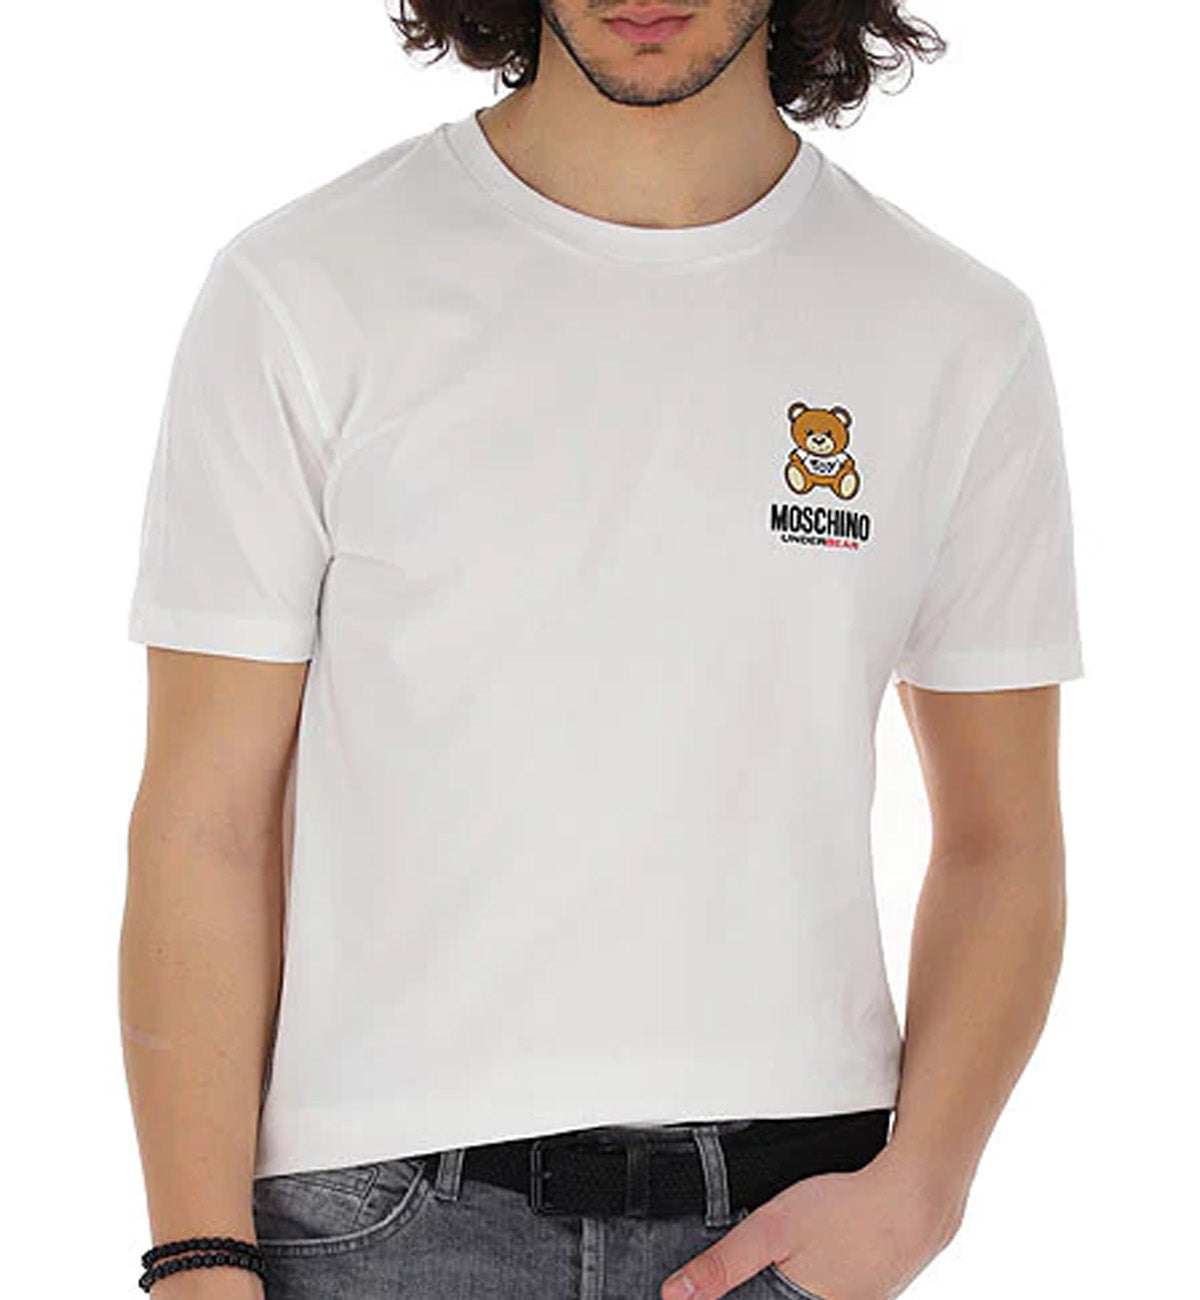 Moschino Underbear Chest Logo T-shirt (White)